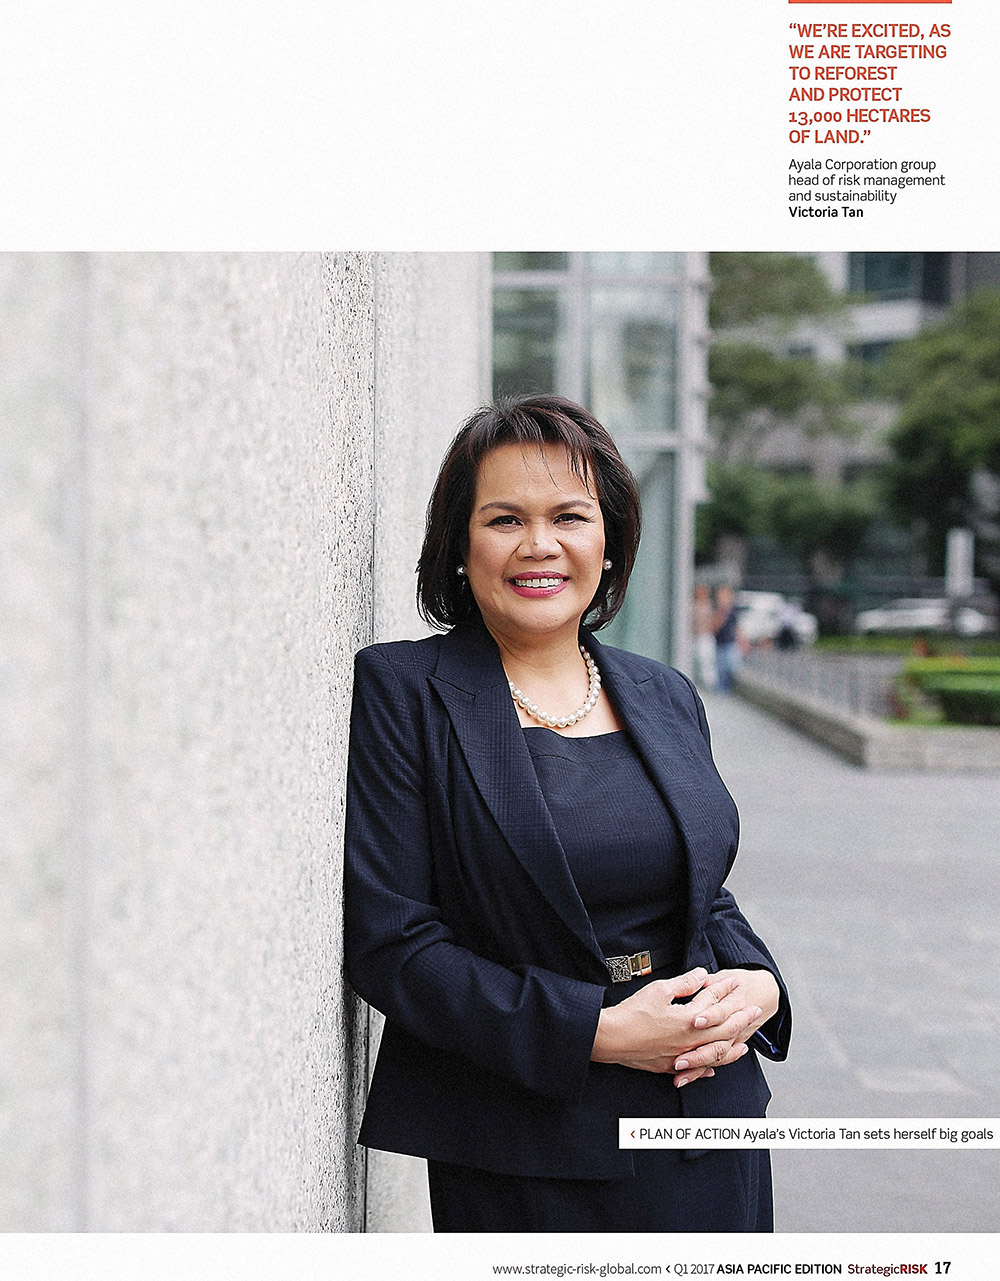 StrategicRISK Magazine Global Asia-Pacific Region hired Manila-based photographer